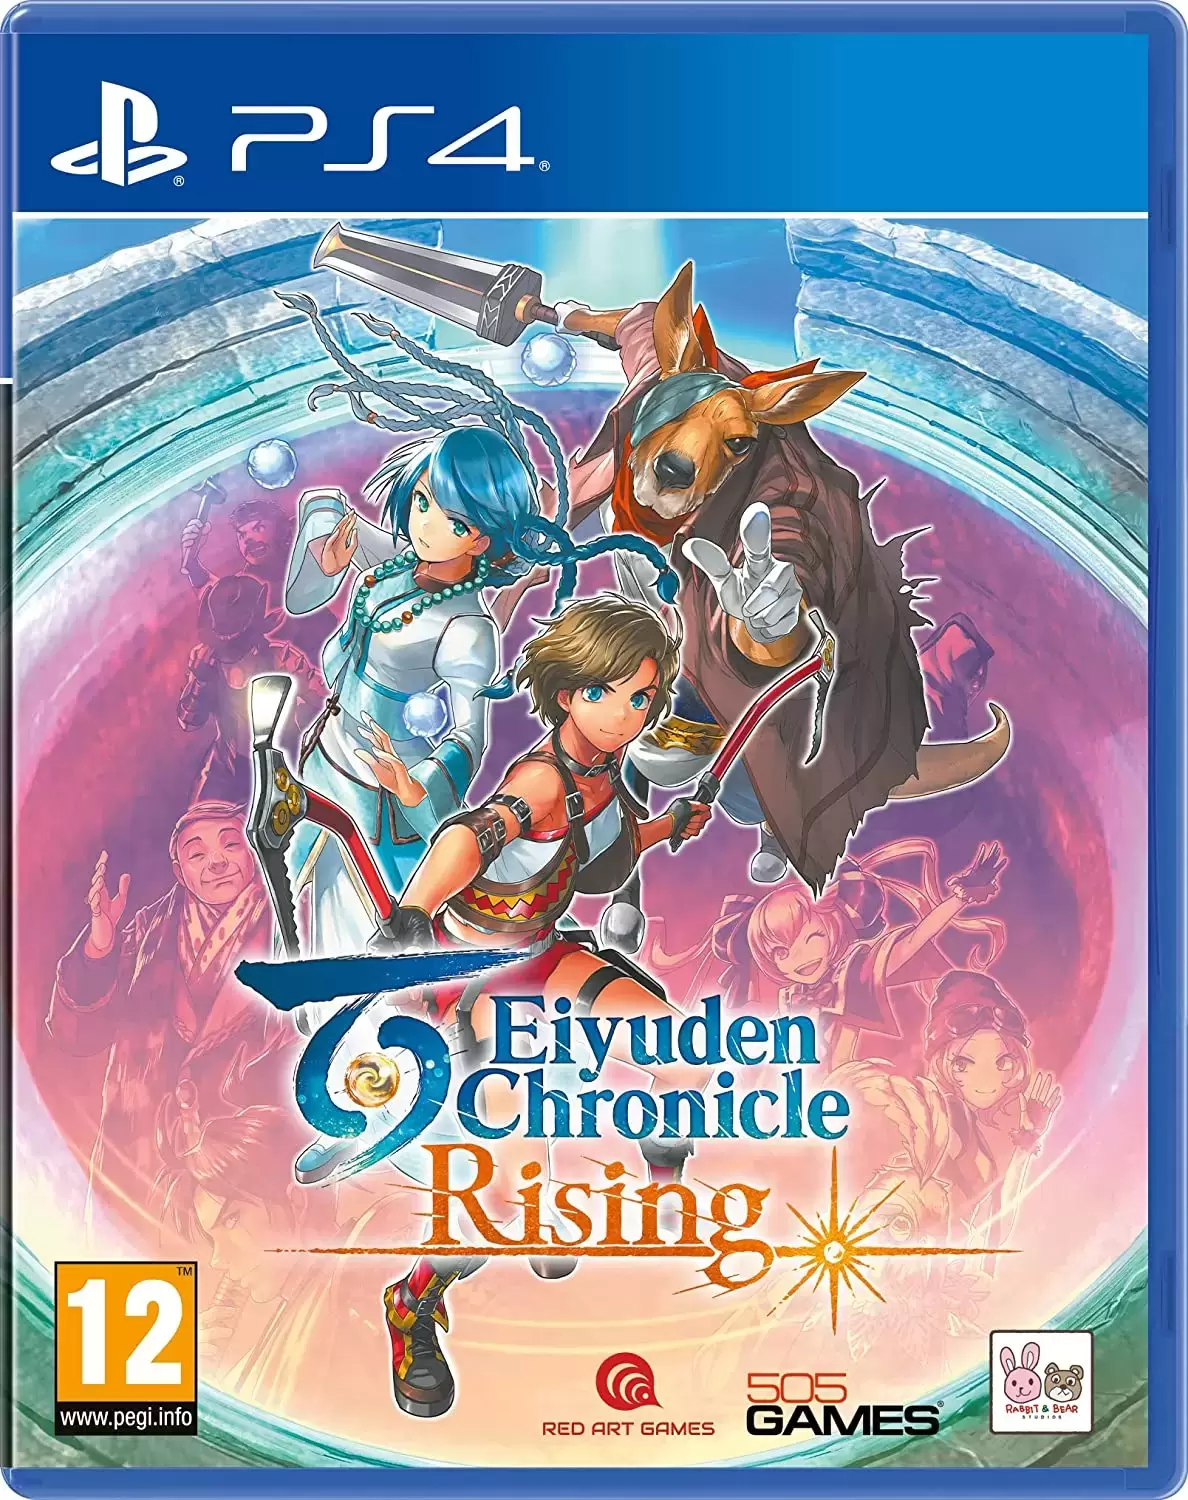 PS4 Games - Eiyuden Chronicle Rising